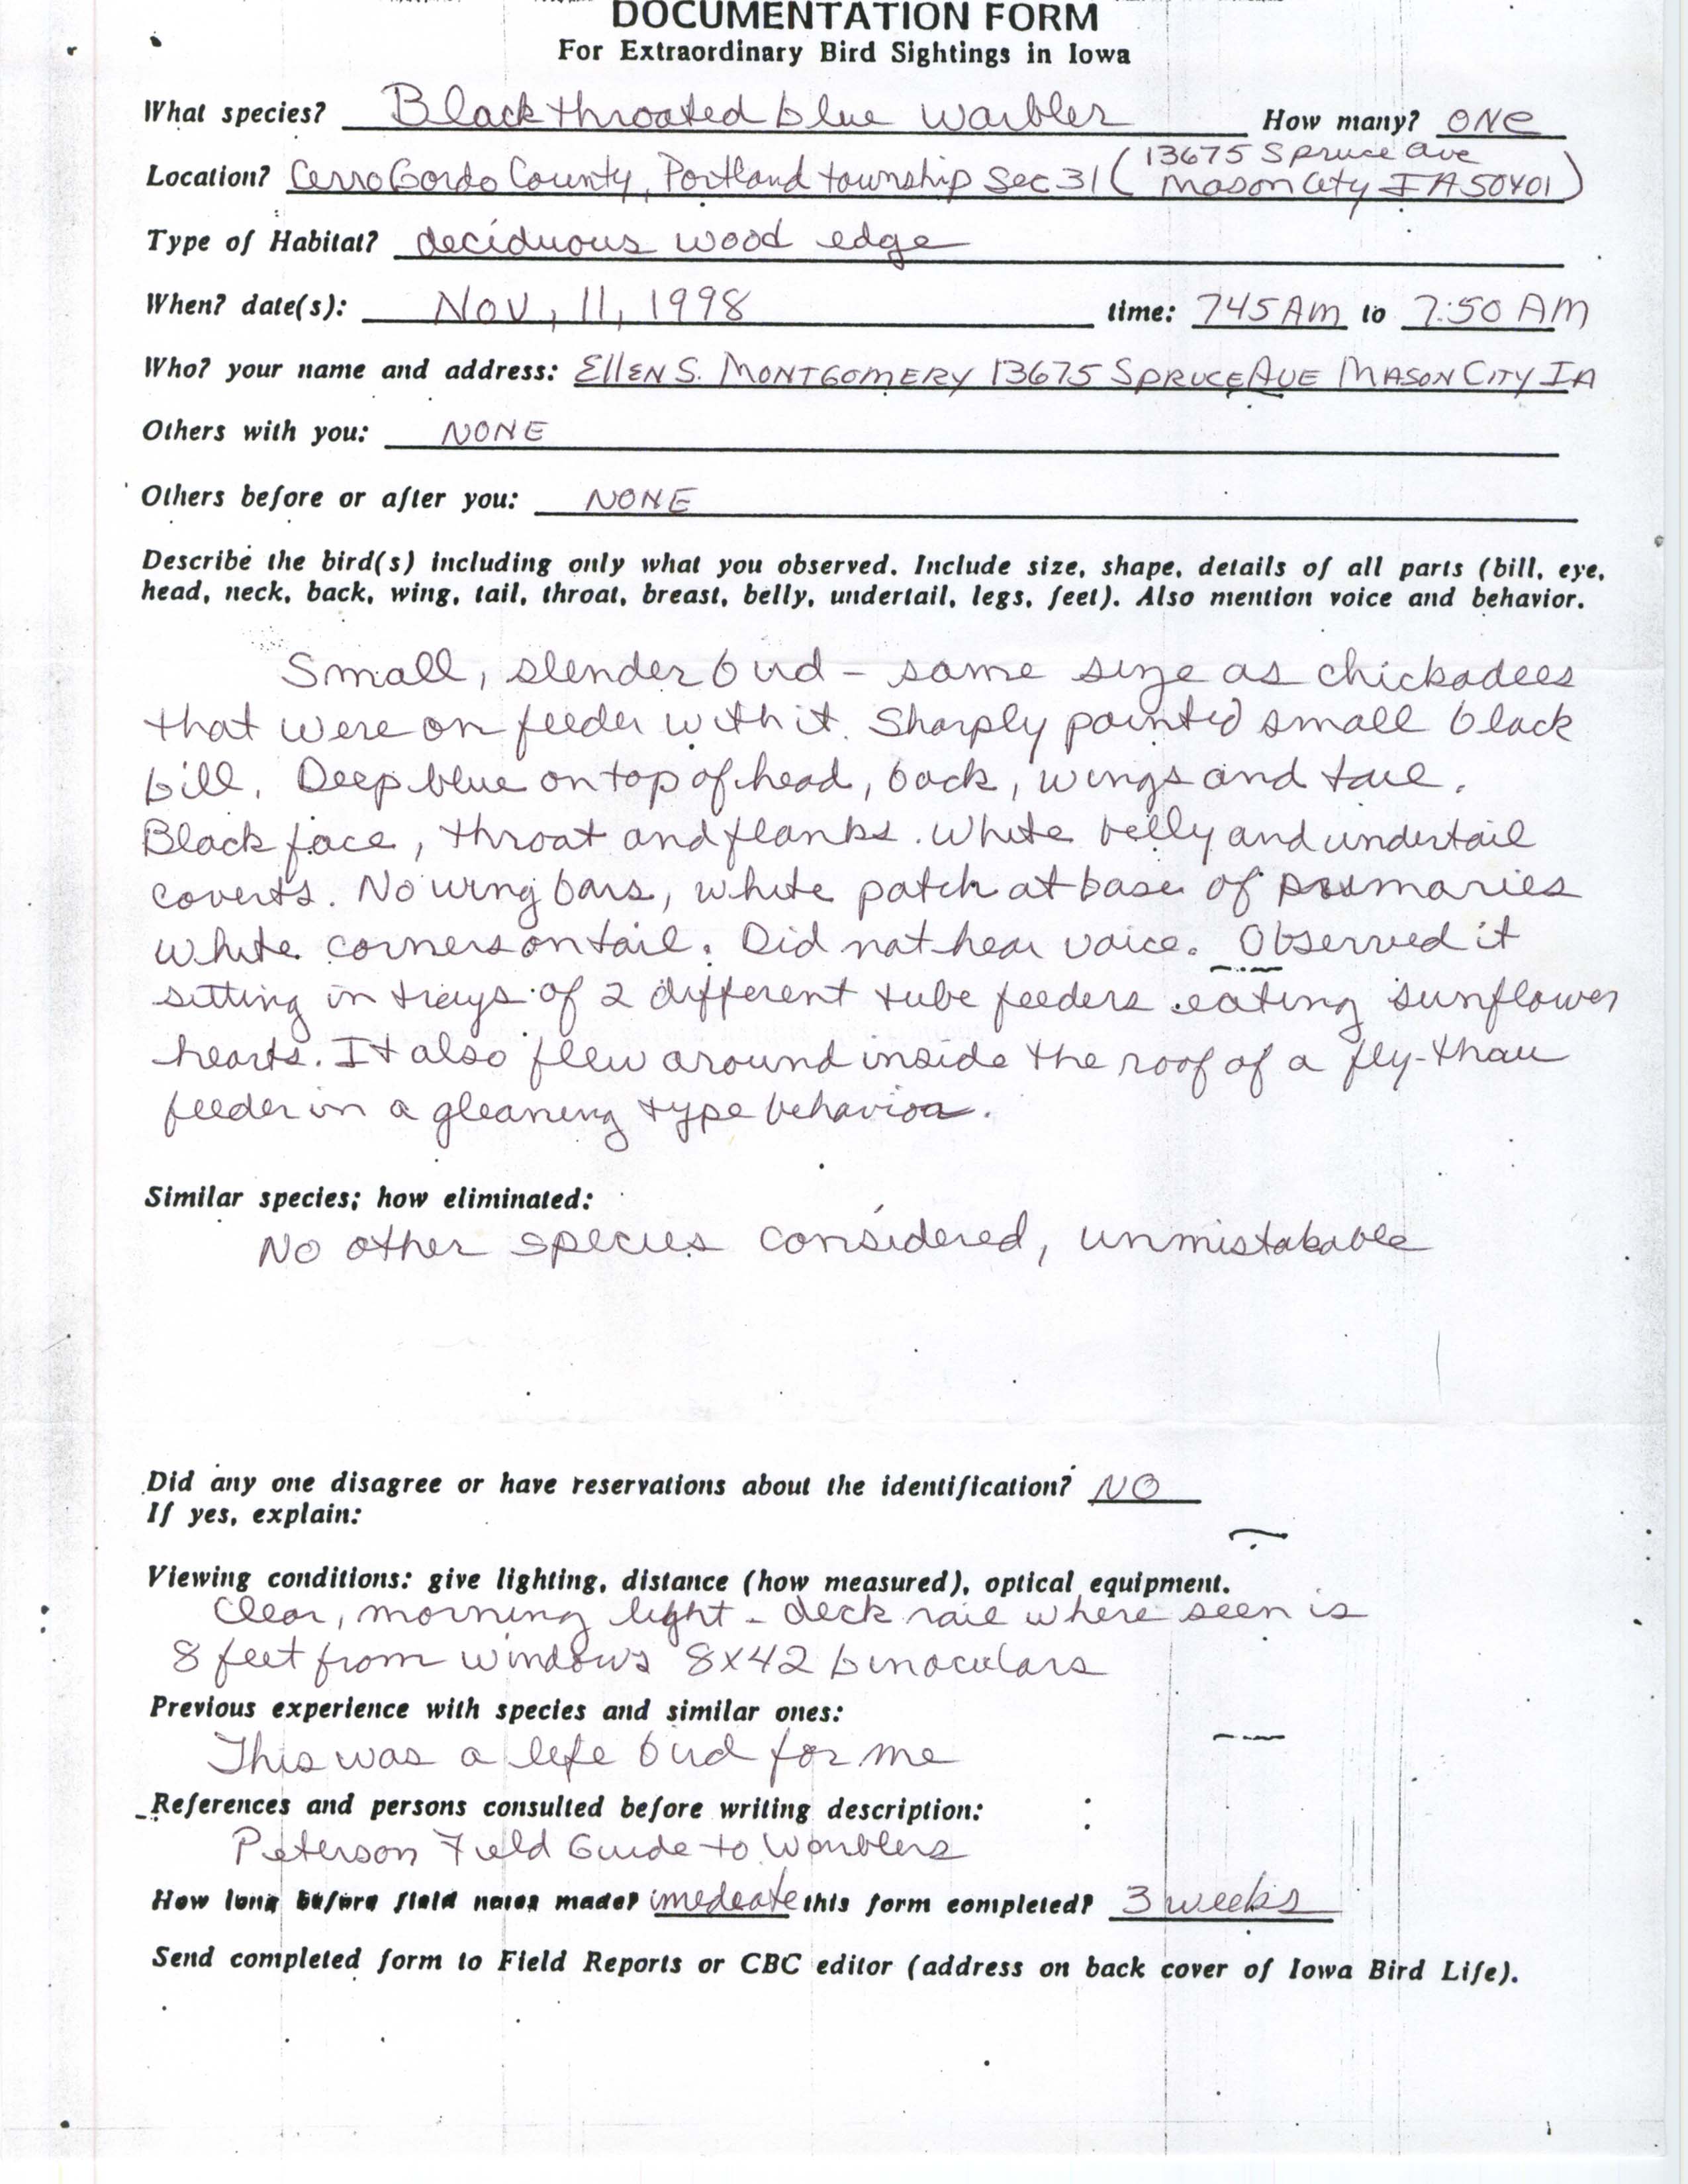 Rare bird documentation form for Black-throated Blue Warbler at Portland Township in Cerro Gordo County, 1998